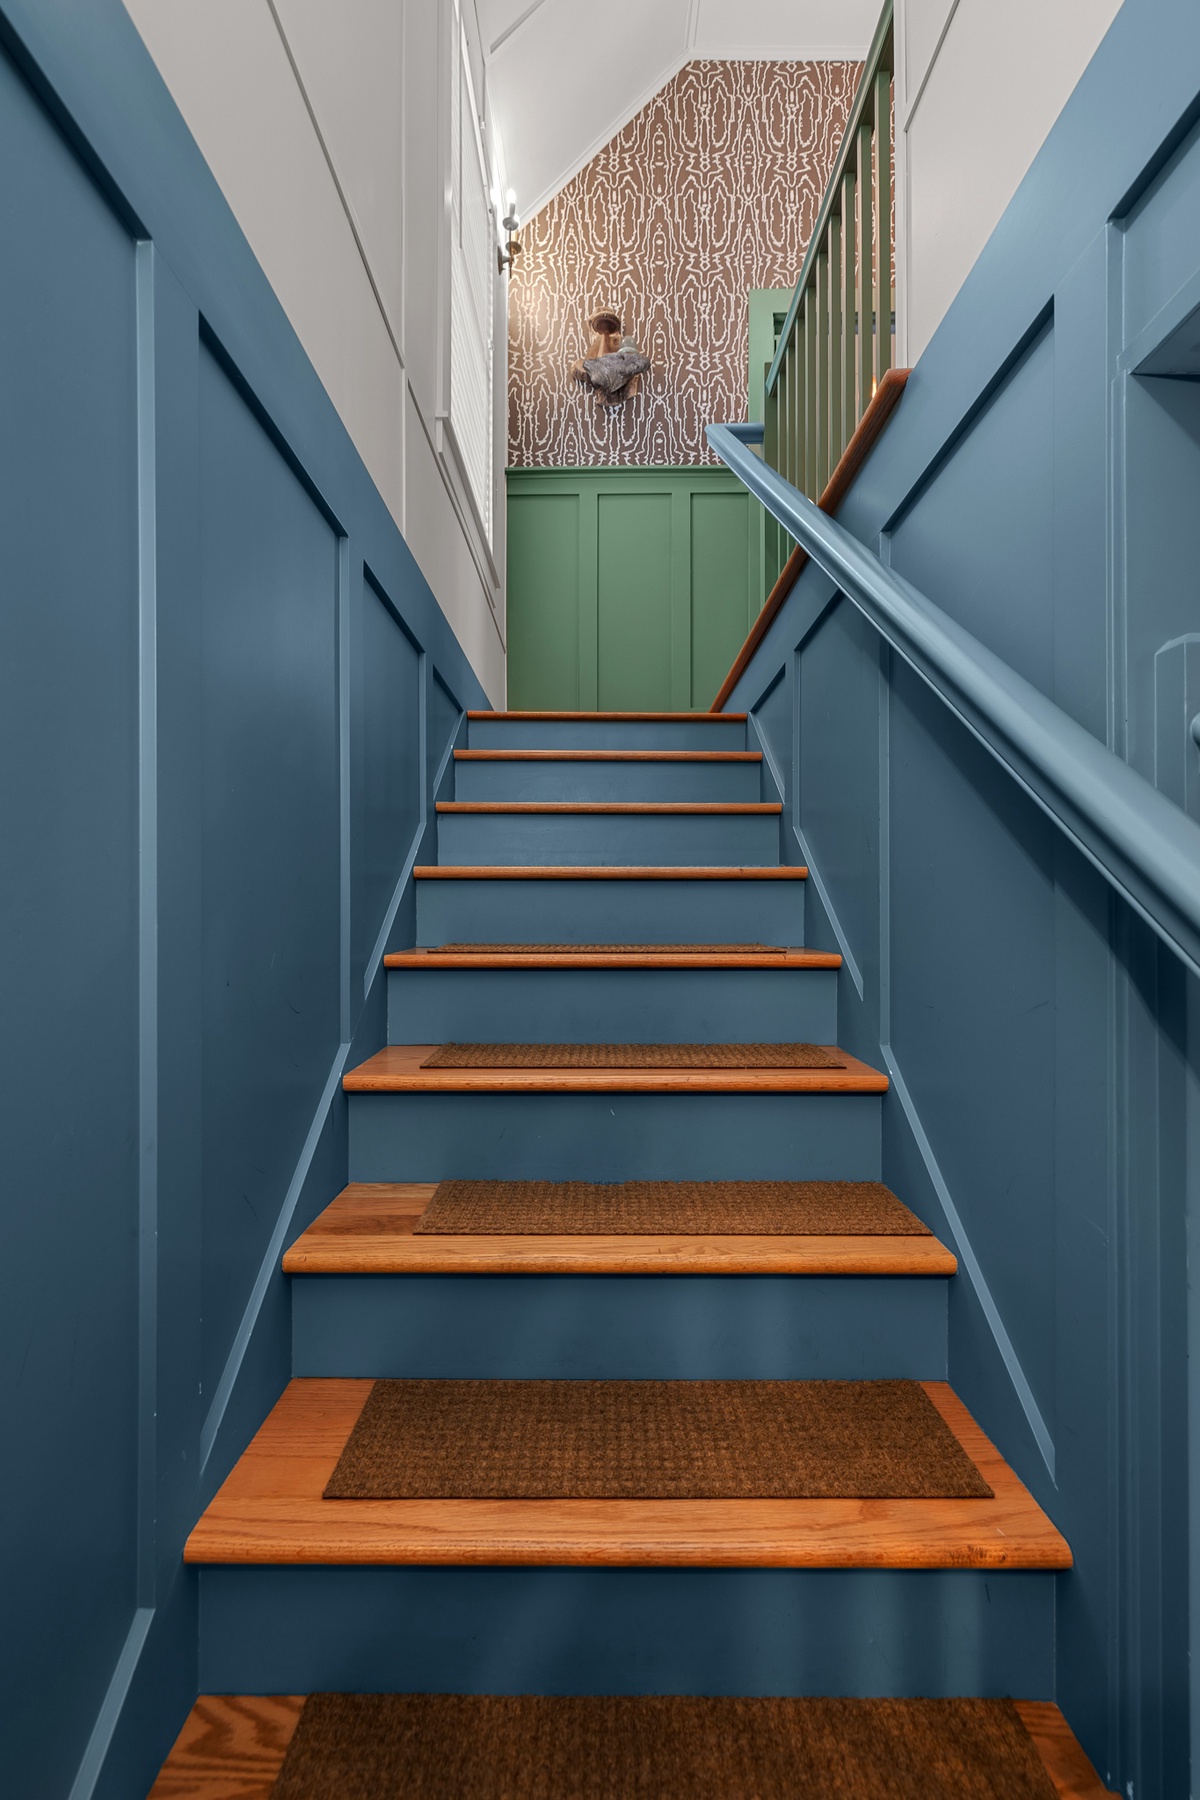 stairway to bedrooms